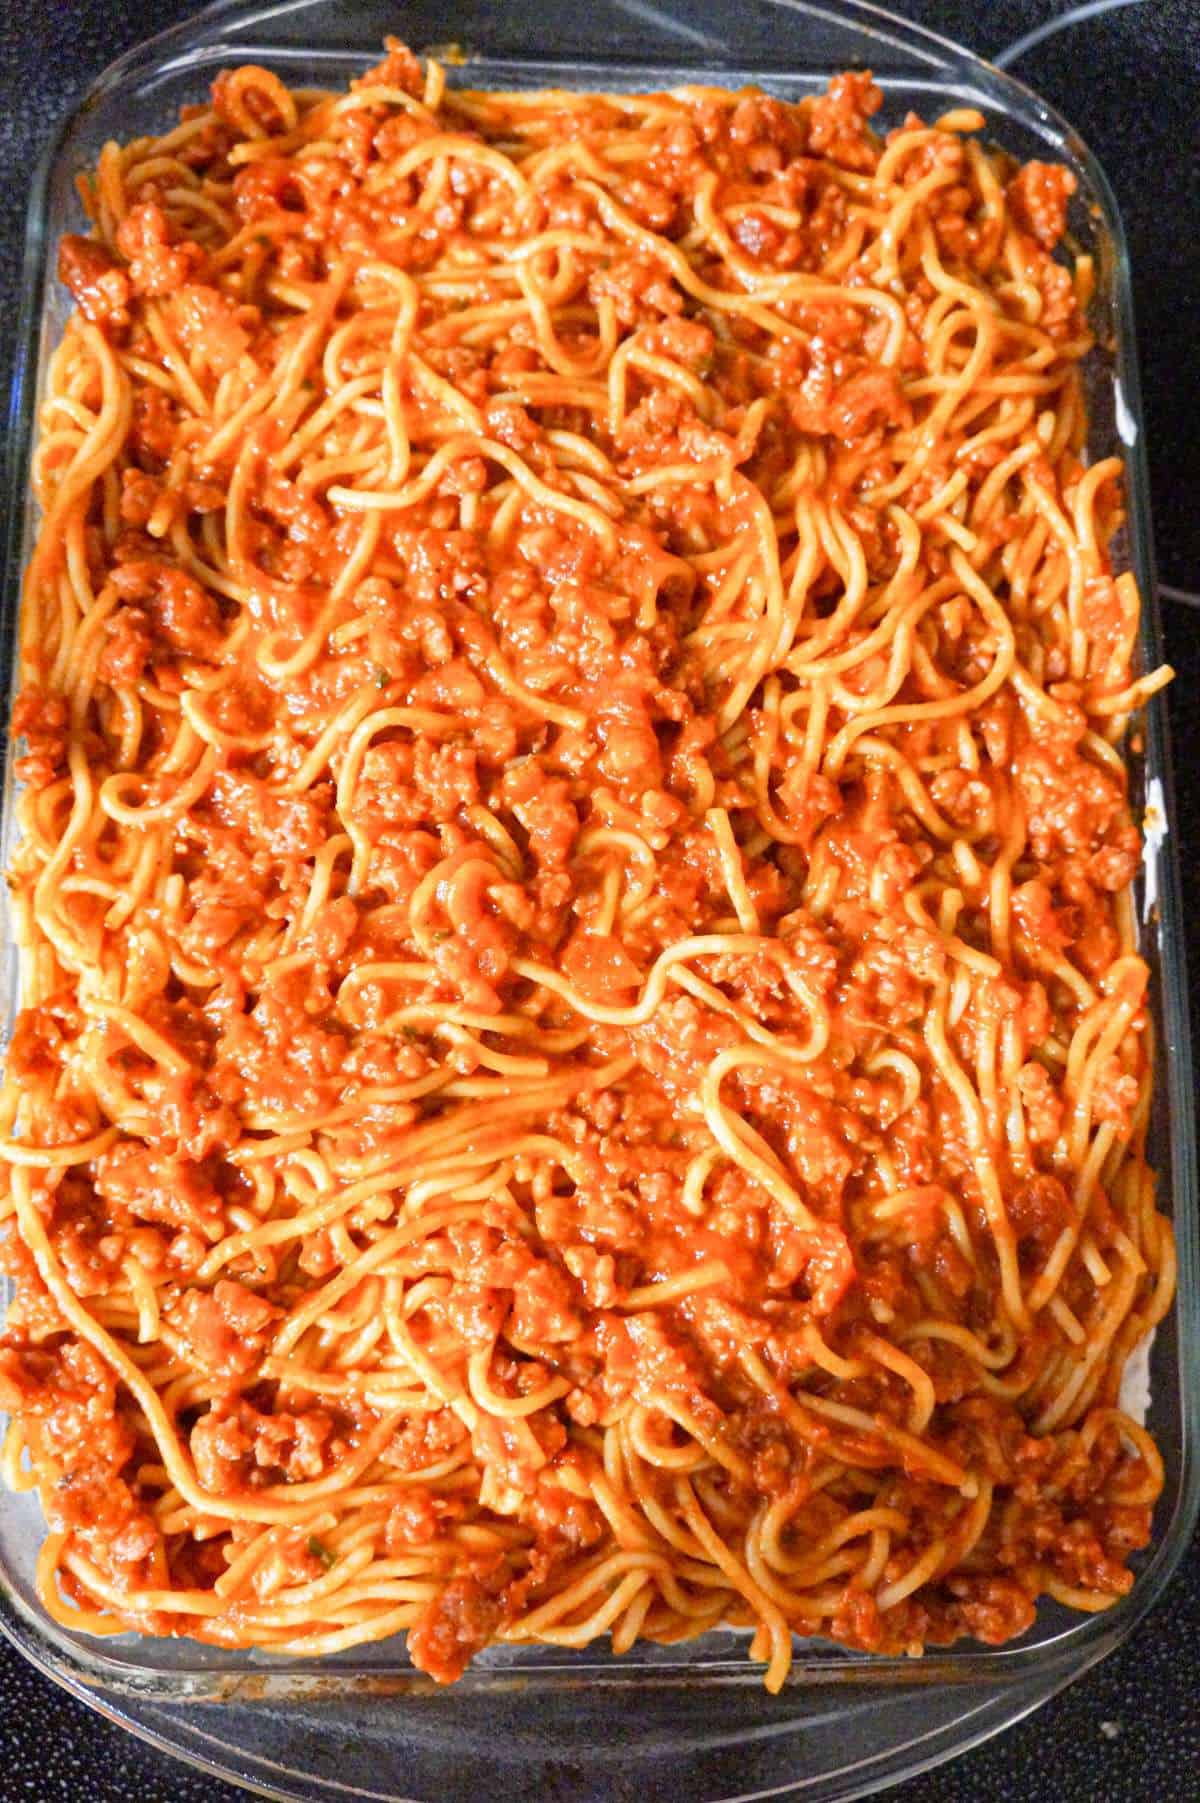 spaghetti, marina and ground sausage mixture in a baking dish